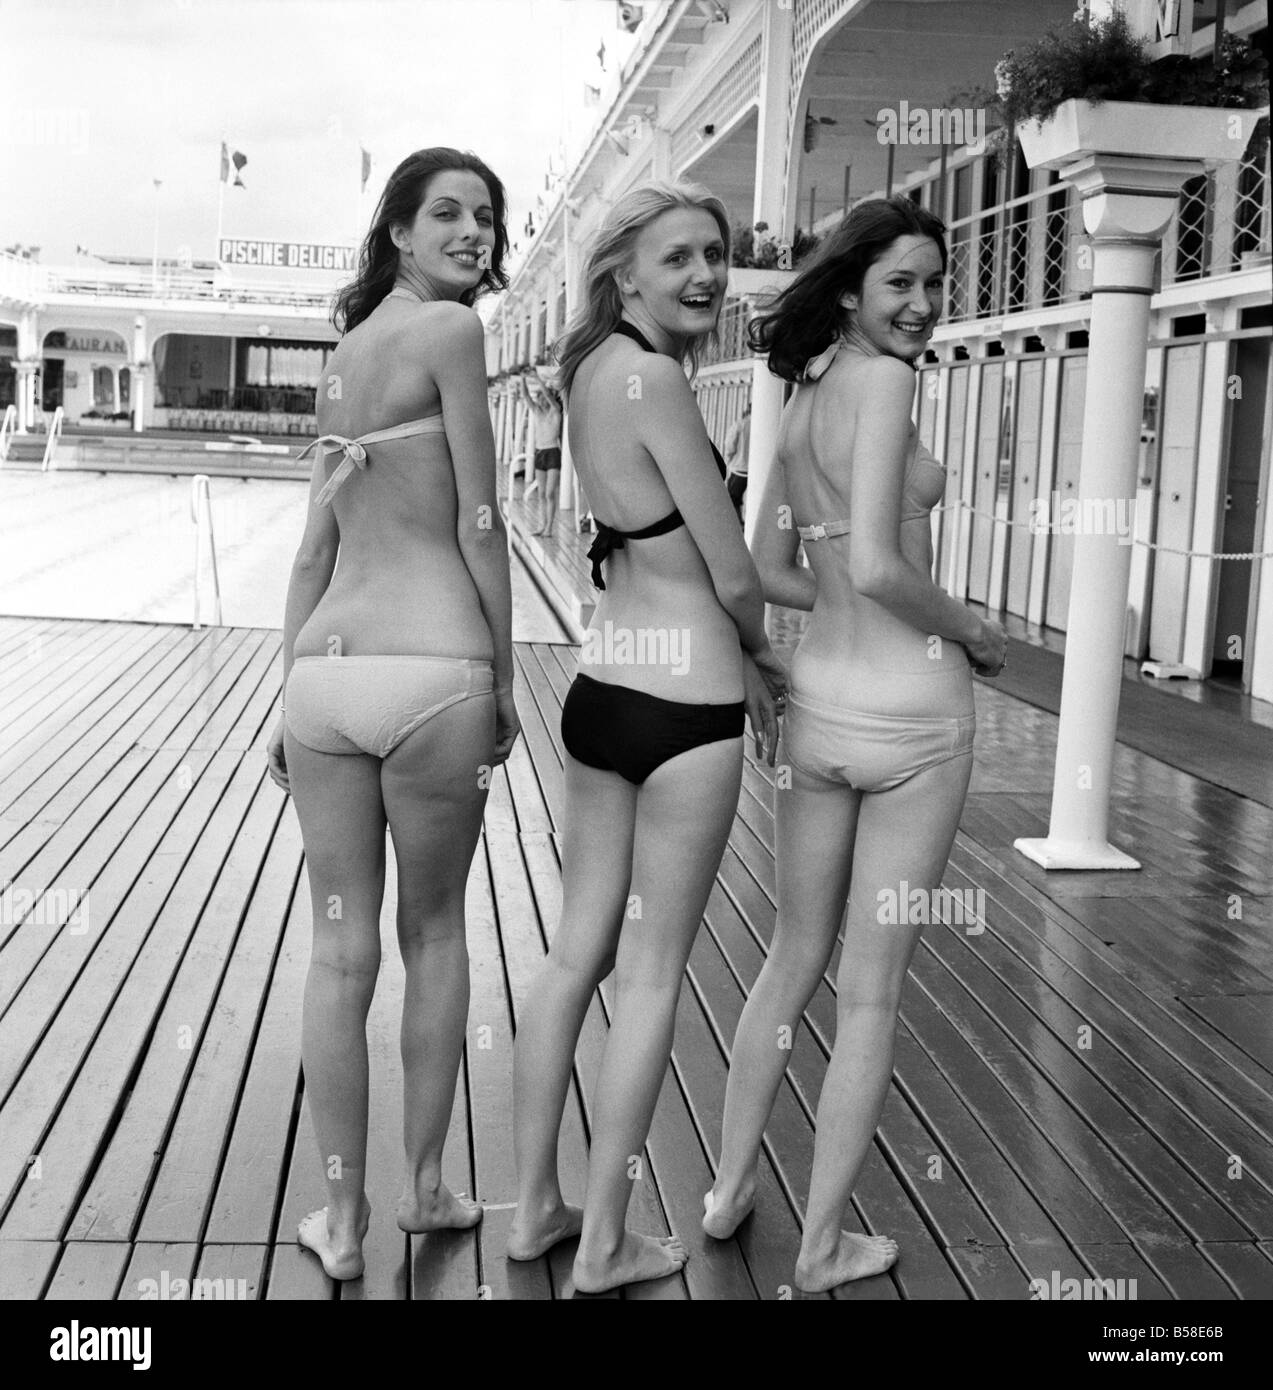 Three women modelling the latest in bikini fashions.. July 1970 70-6839-005  Stock Photo - Alamy